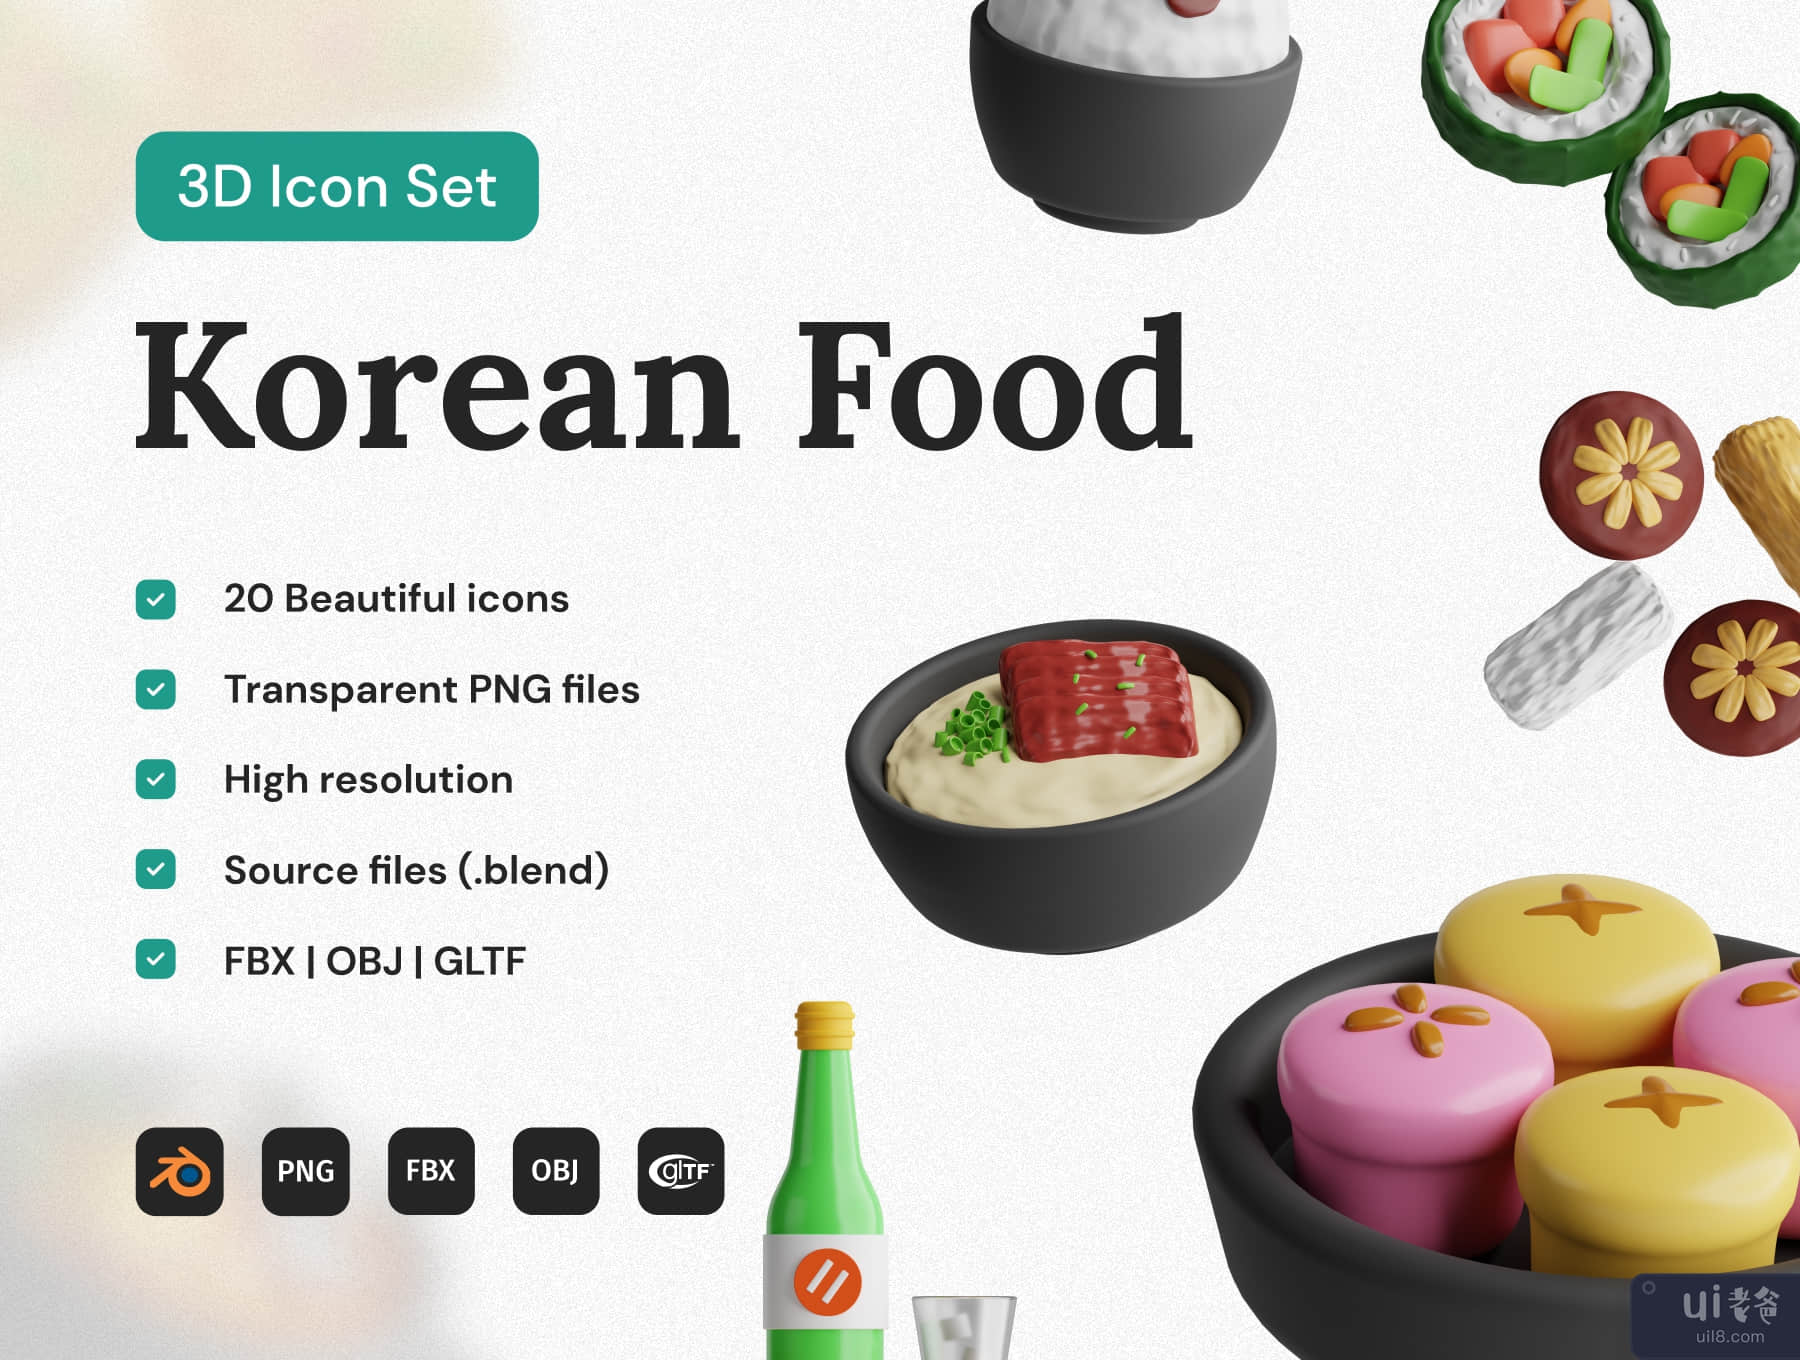 韩国食品 3D 图标集 (Korean Food 3D Icon Set)插图7